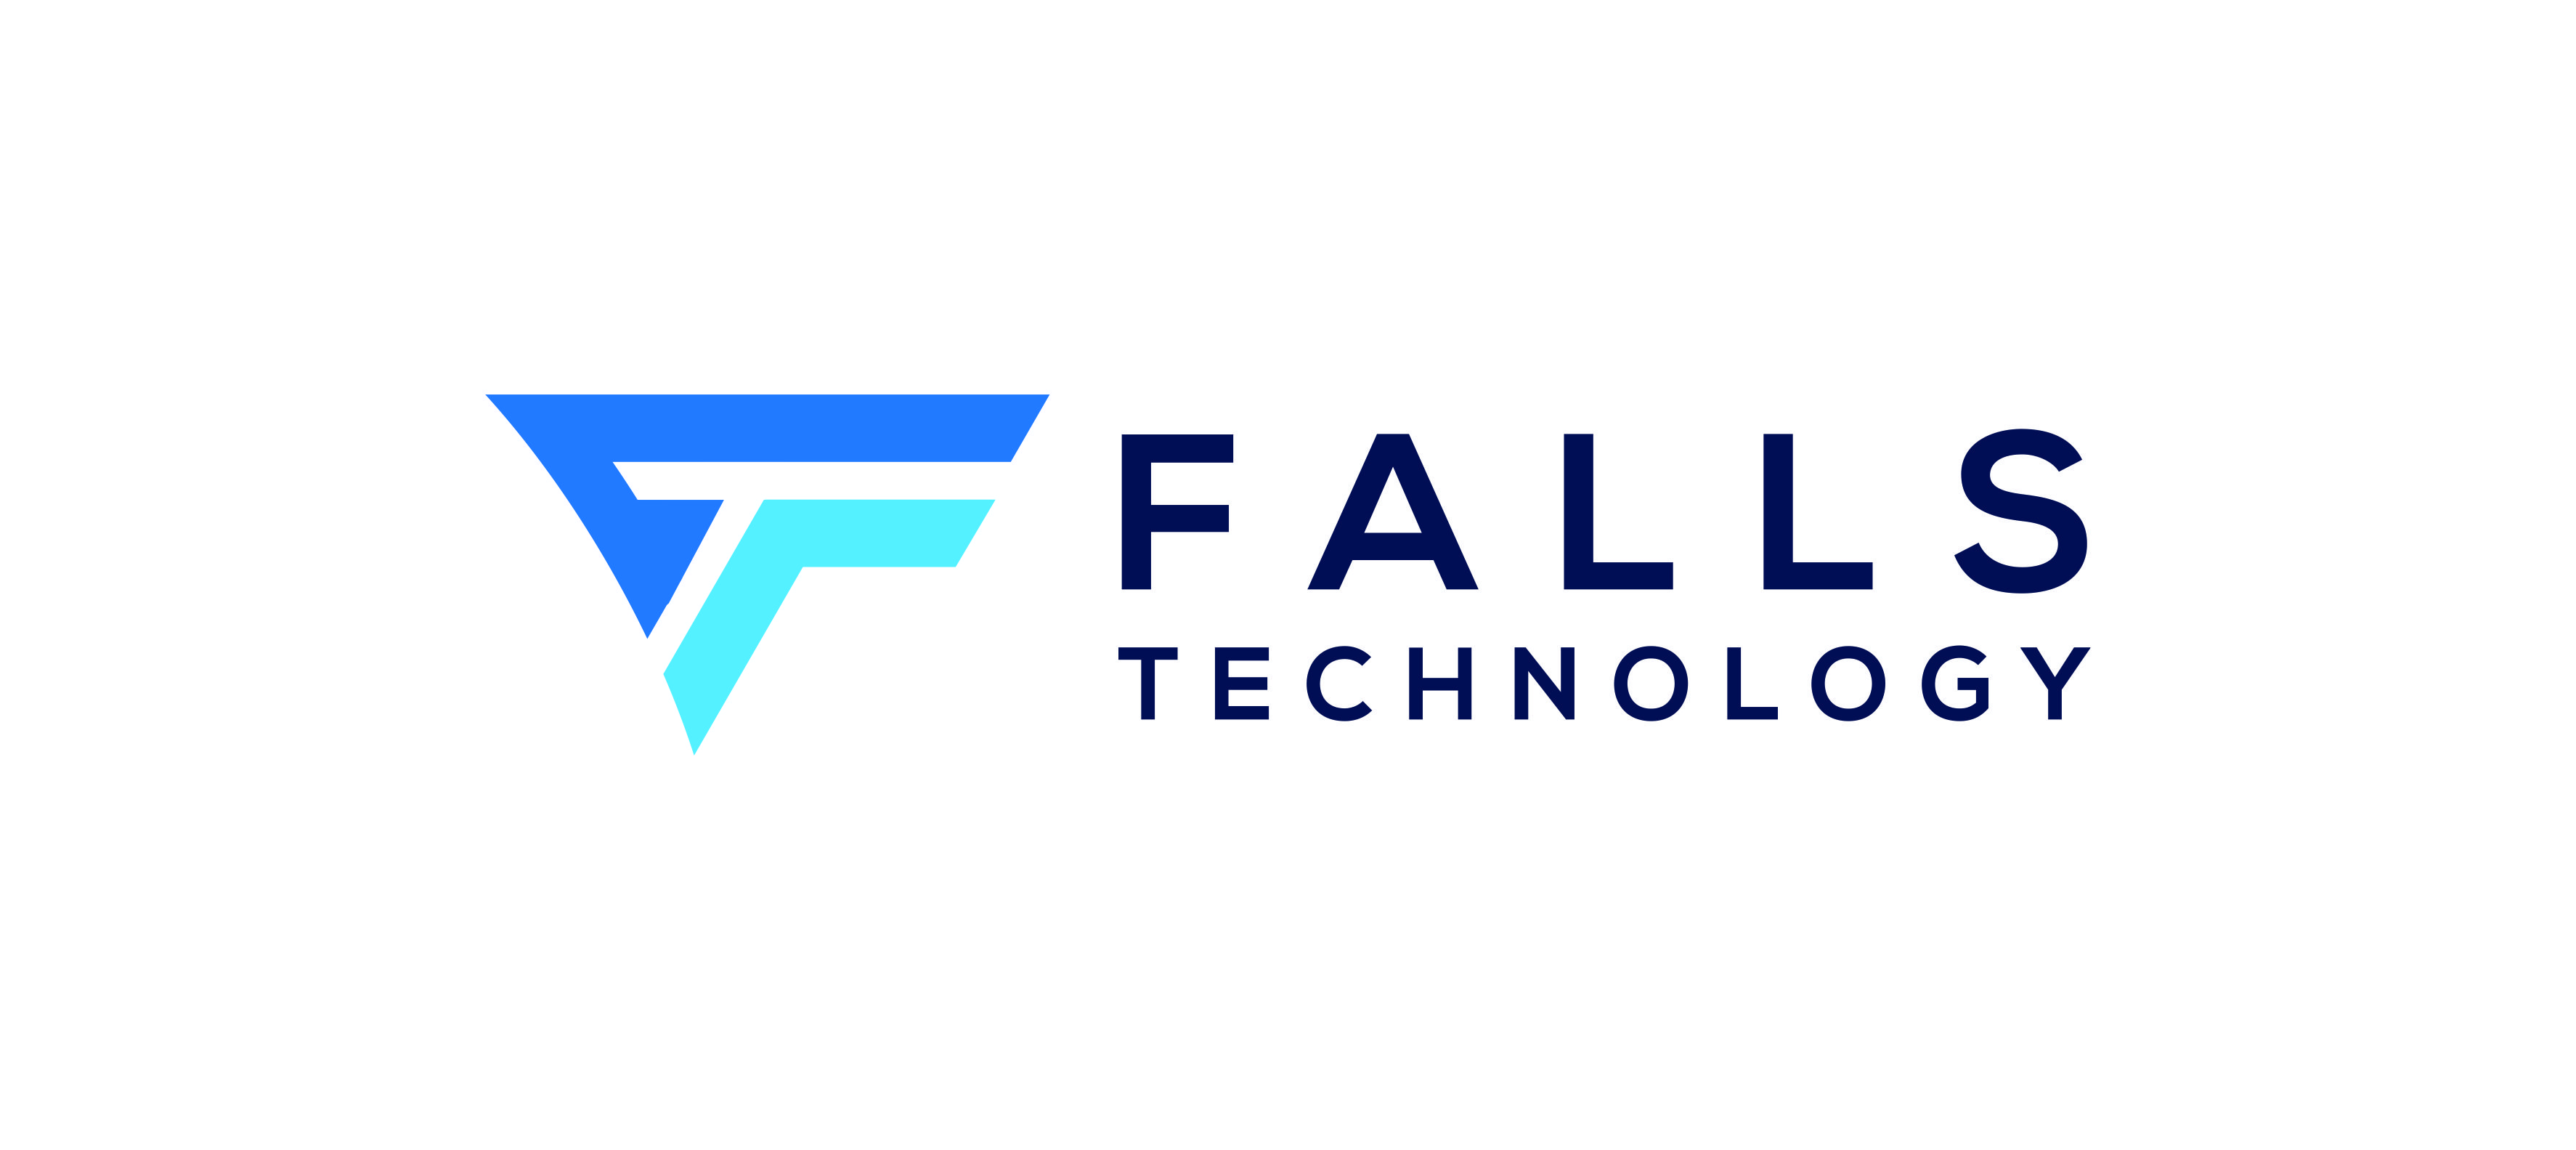 falls-technology-logo--background-white-%281%29